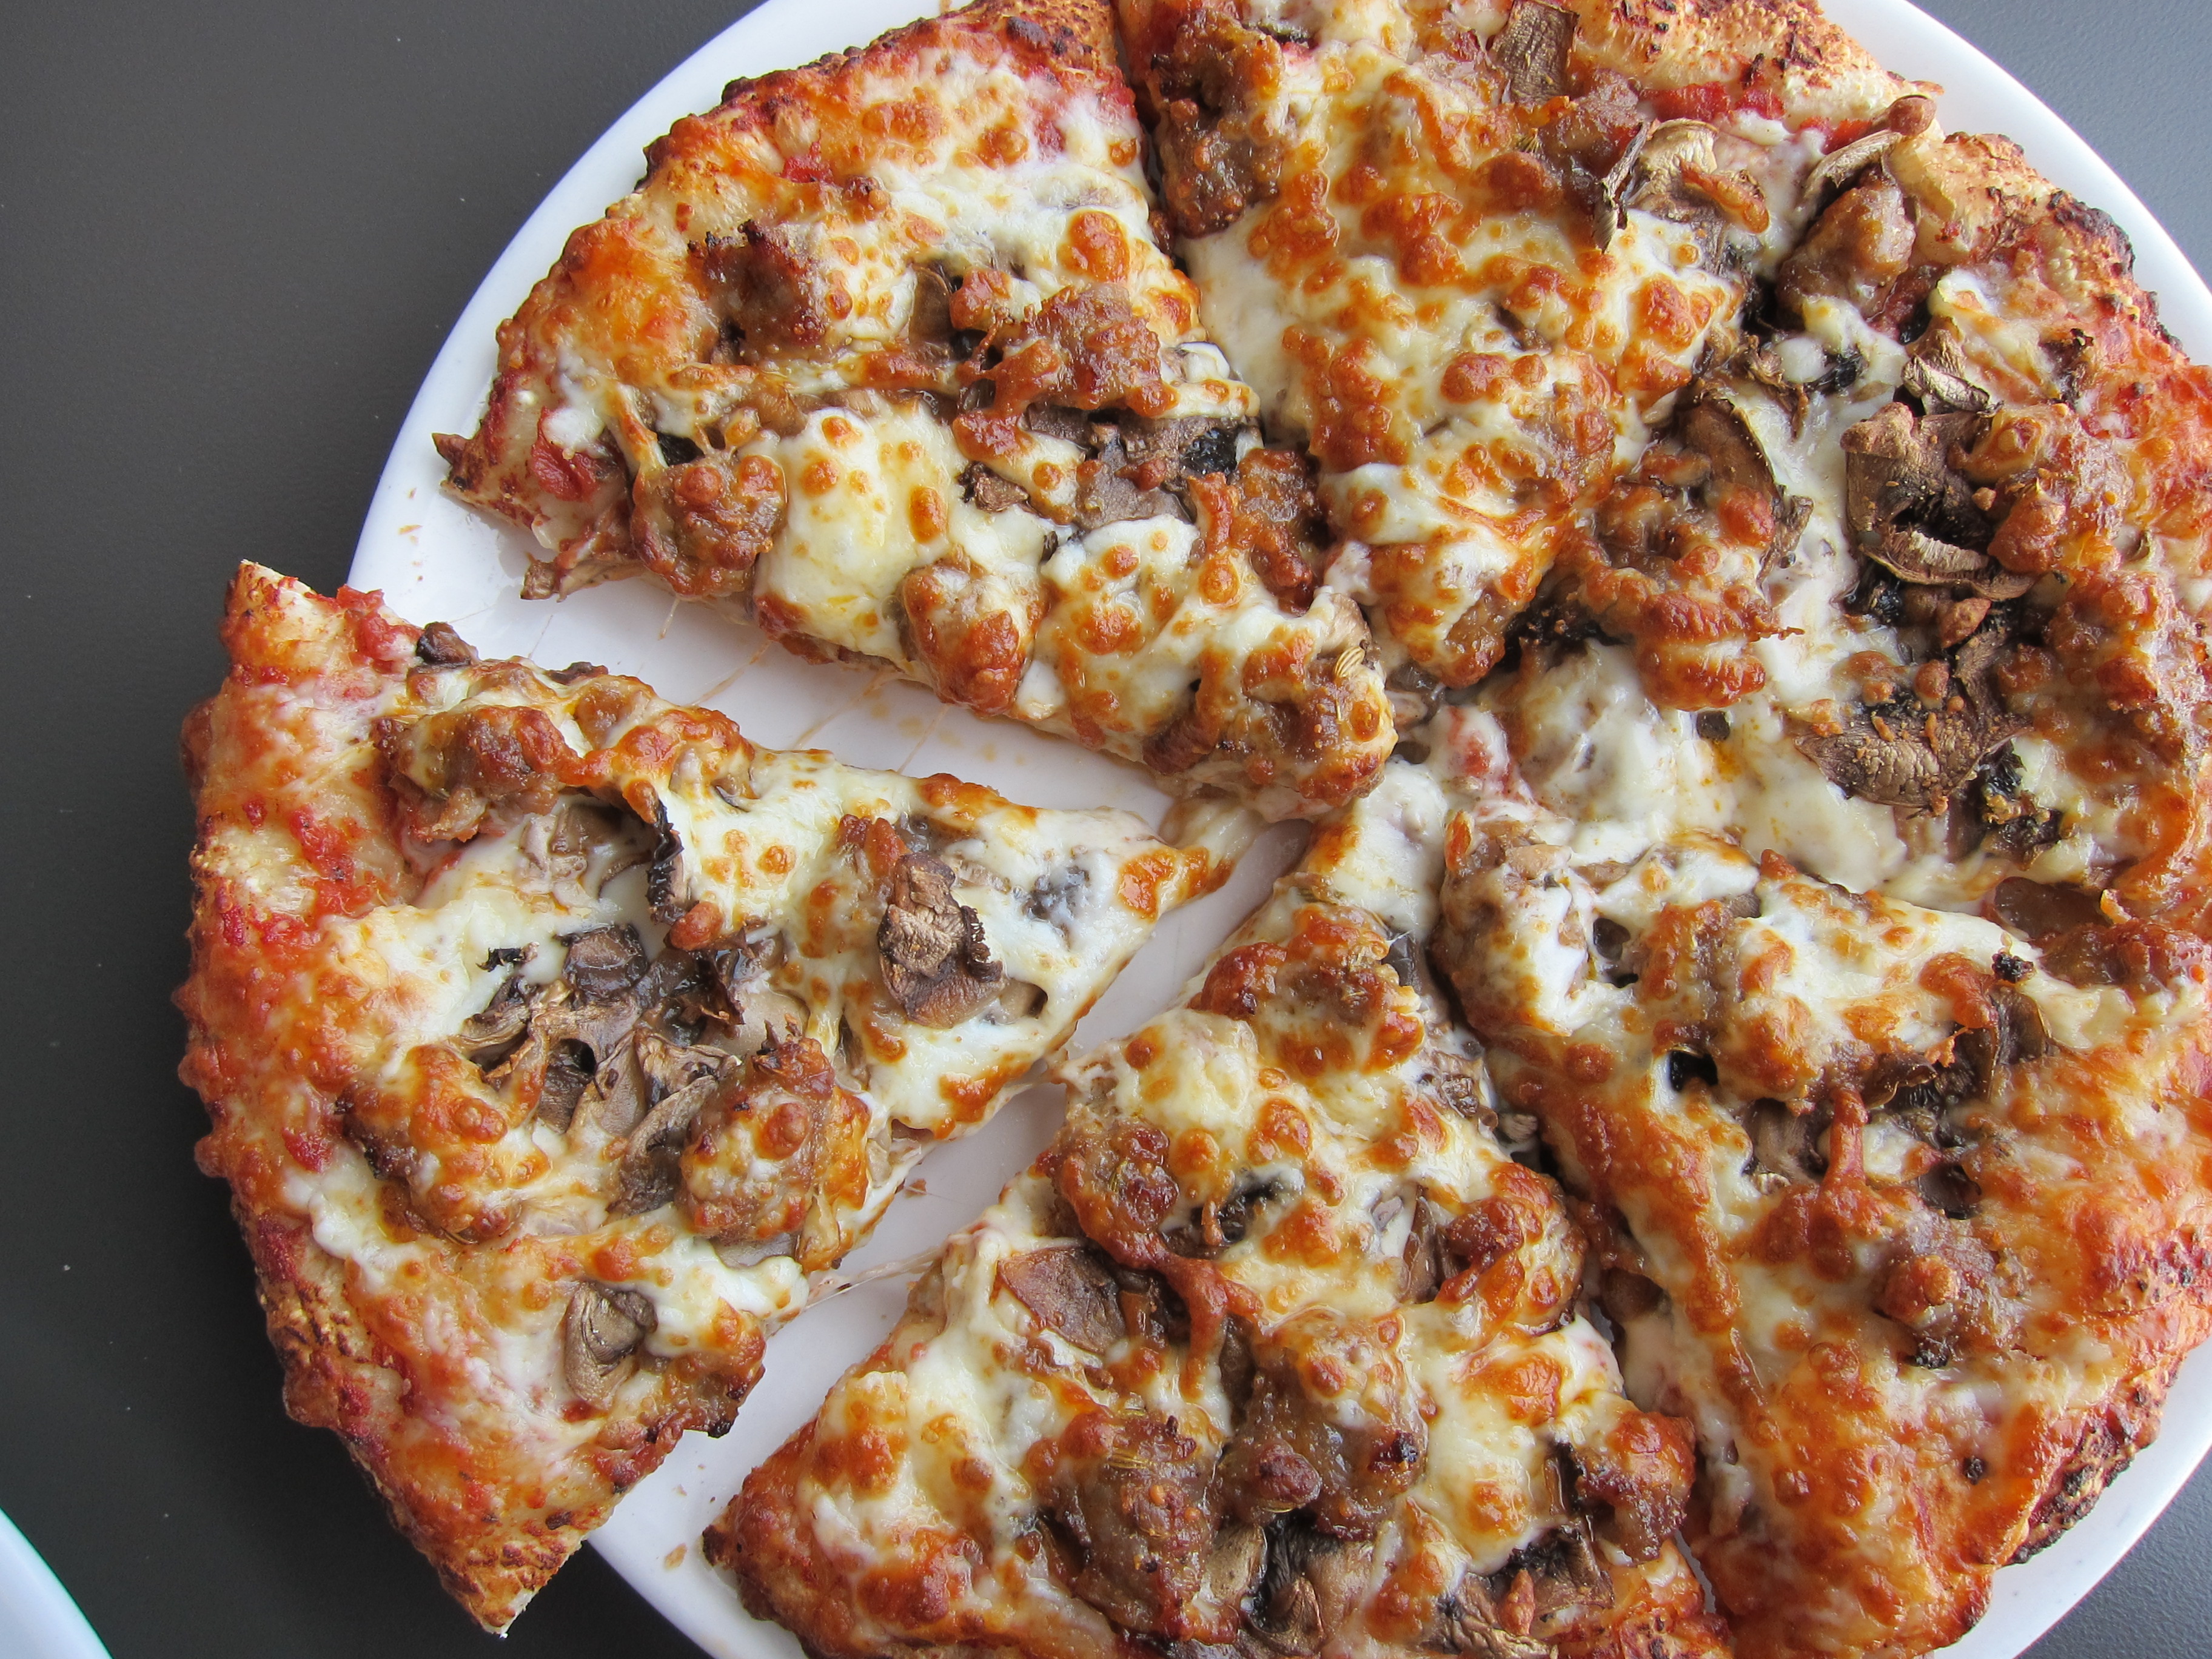 The “Best of” YEG Pizza Odyssey